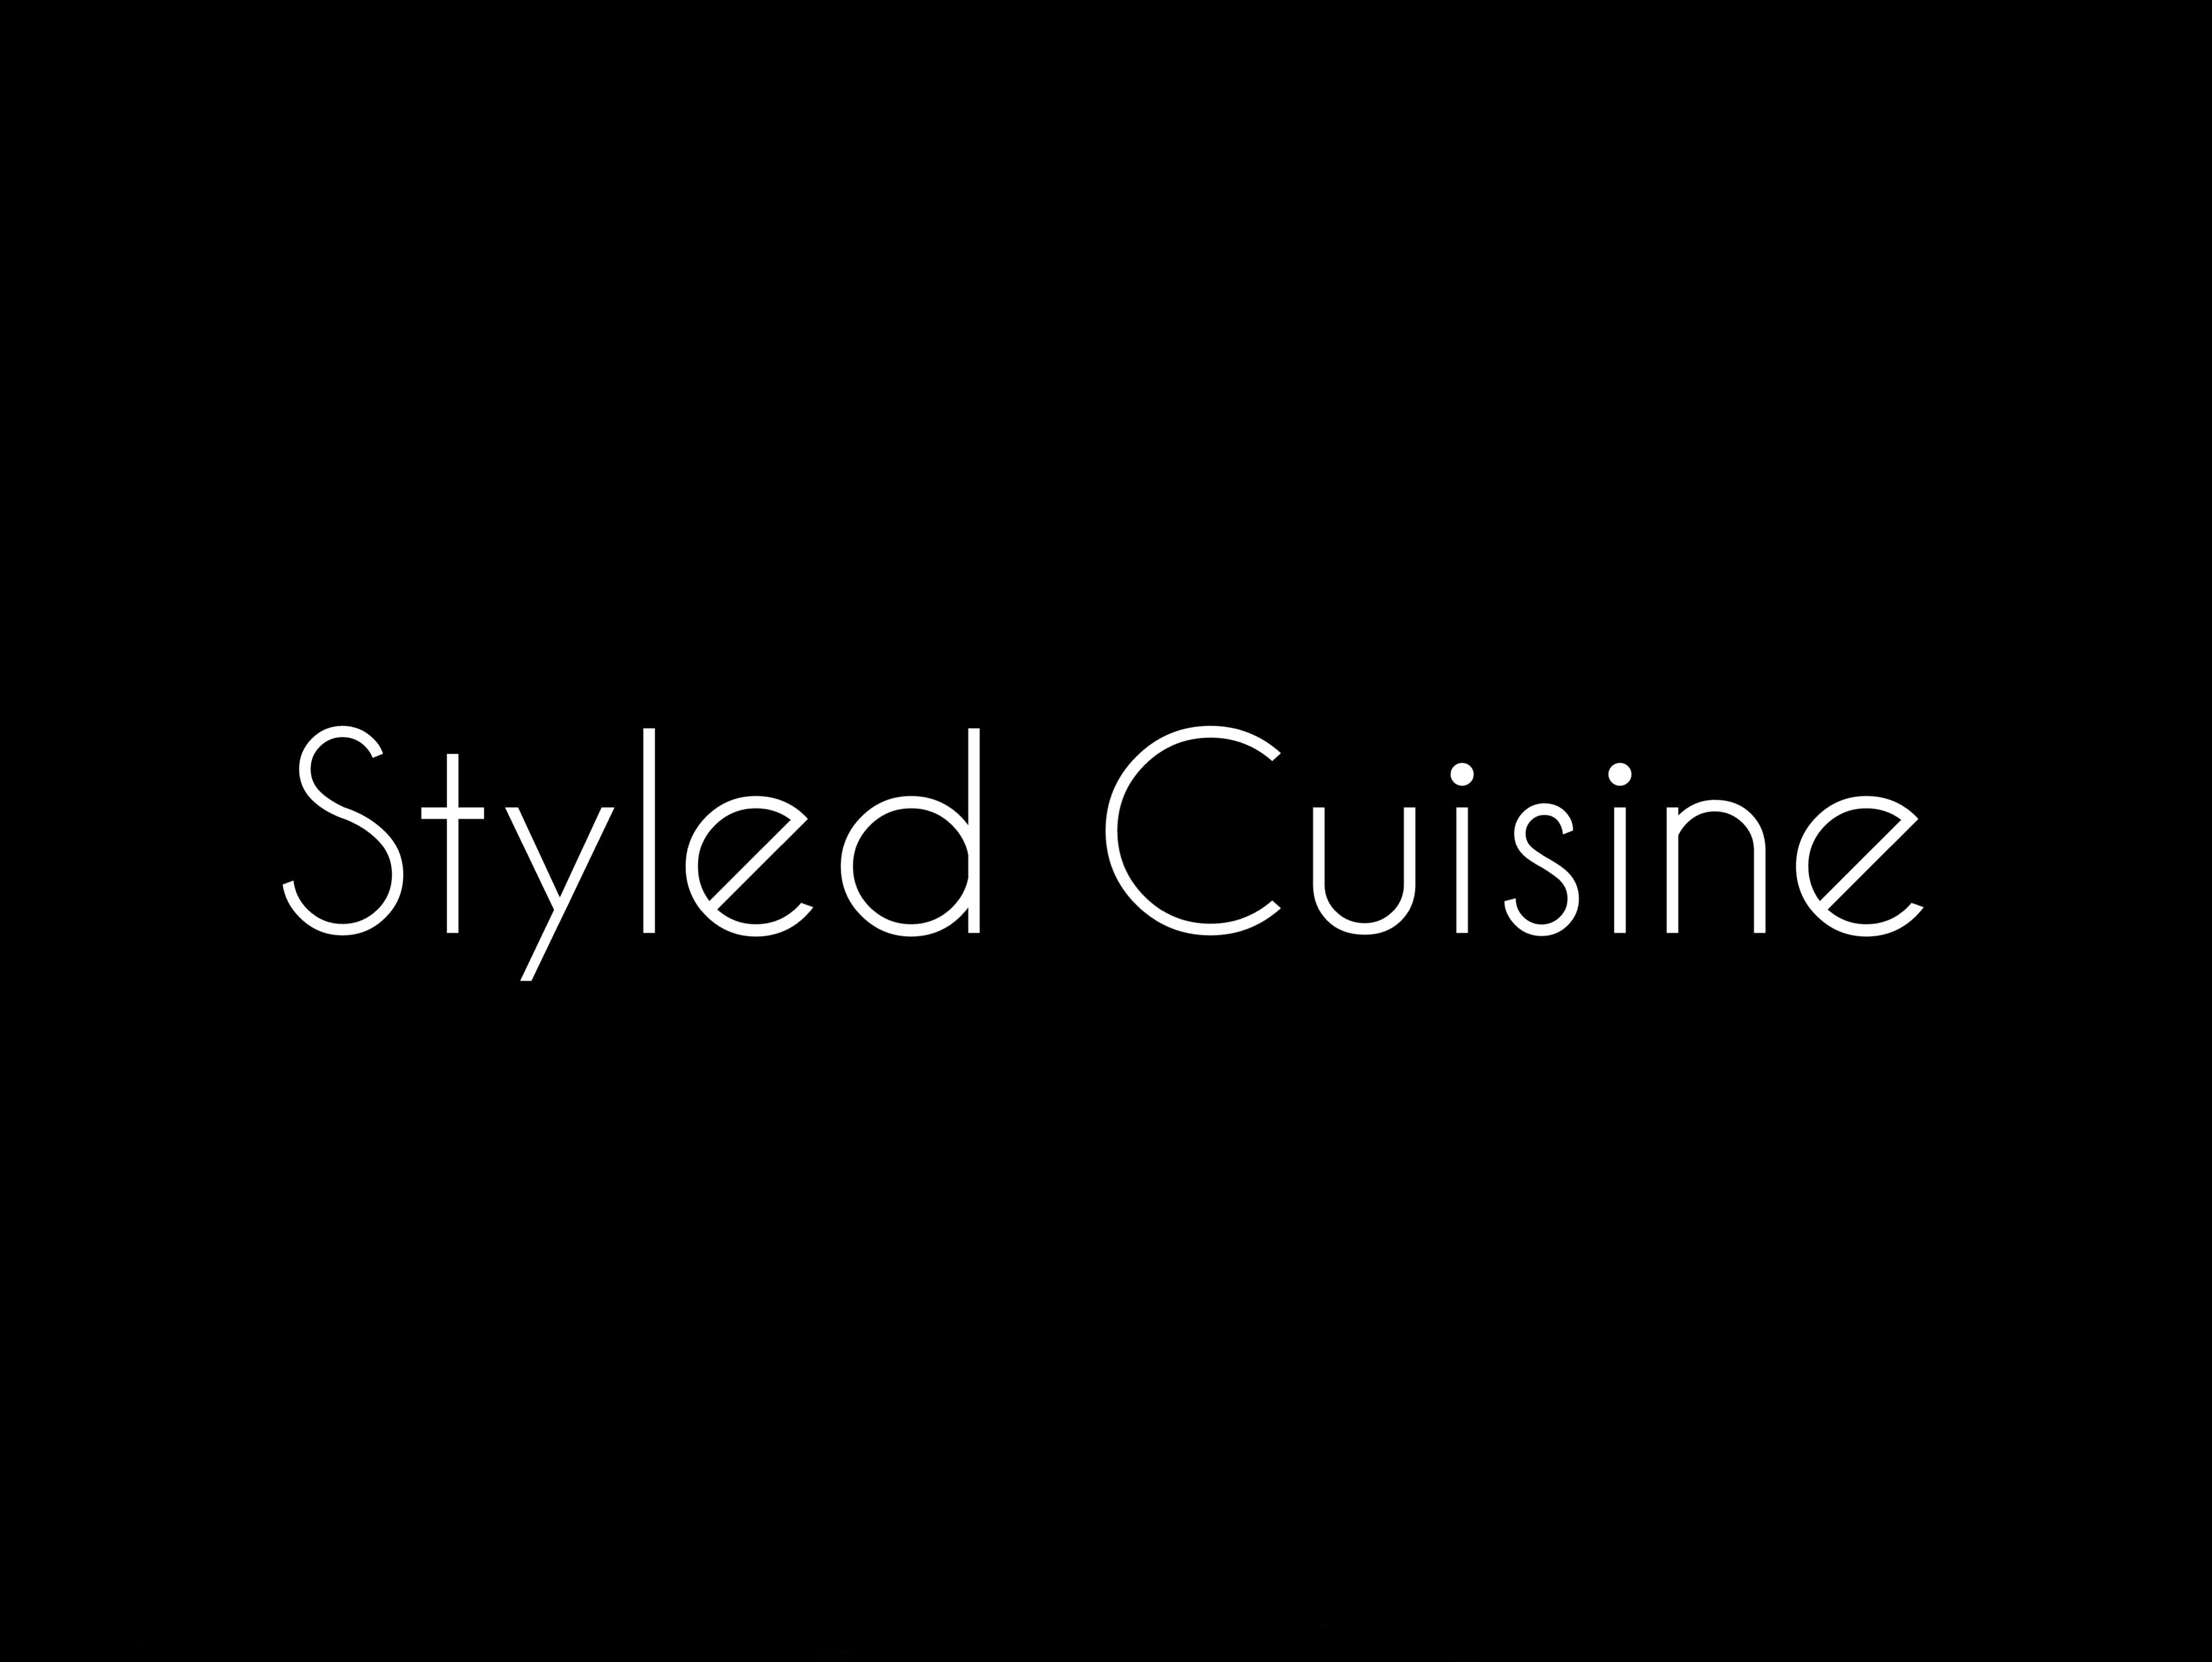 Styled Cuisine